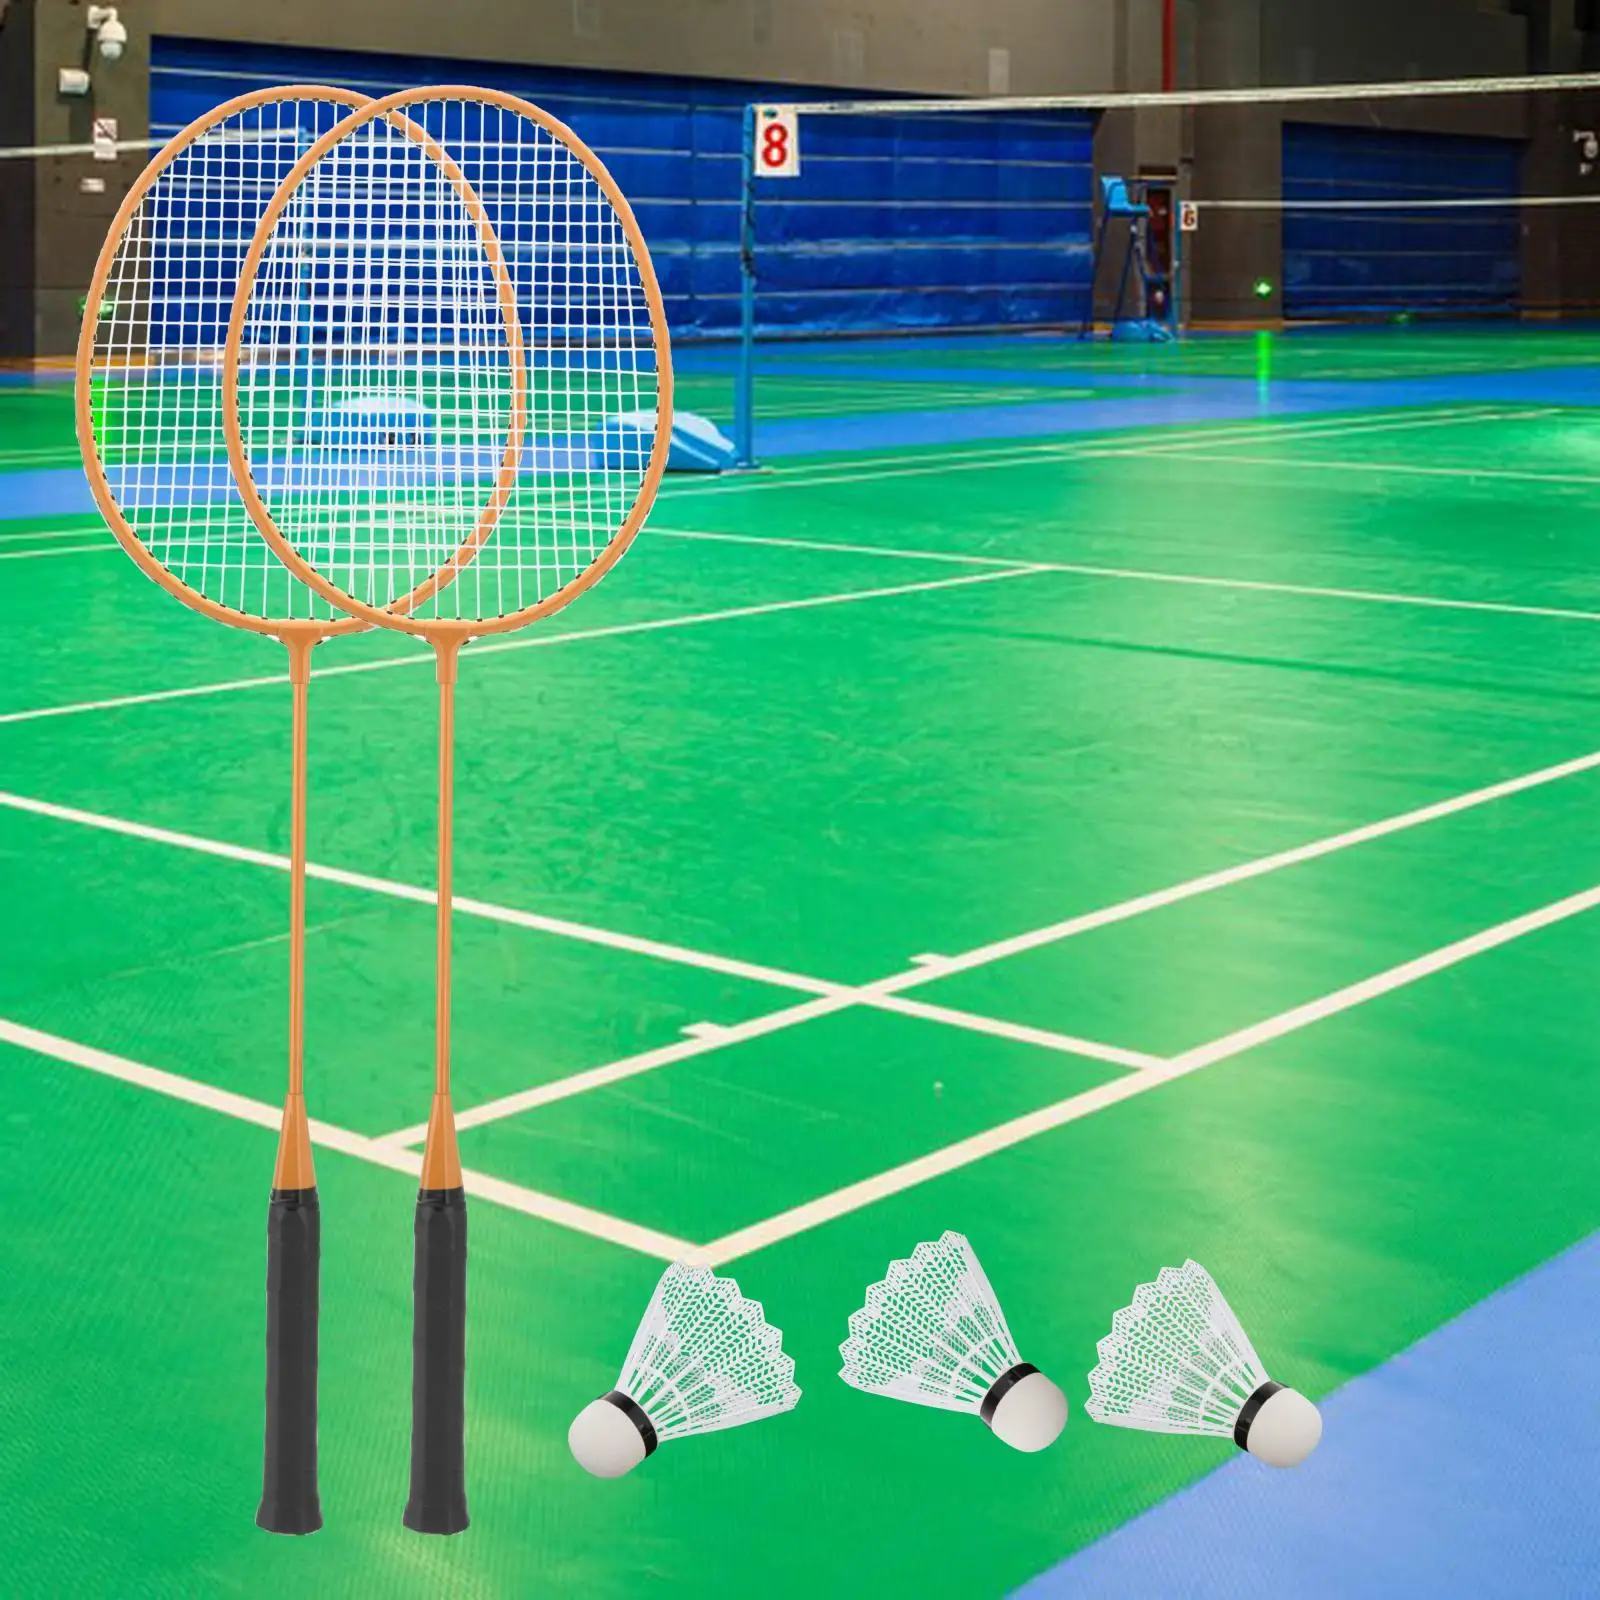 2Pcs Badminton Rackets Badminton Shuttlecock Tennis Racquet Professional with 3